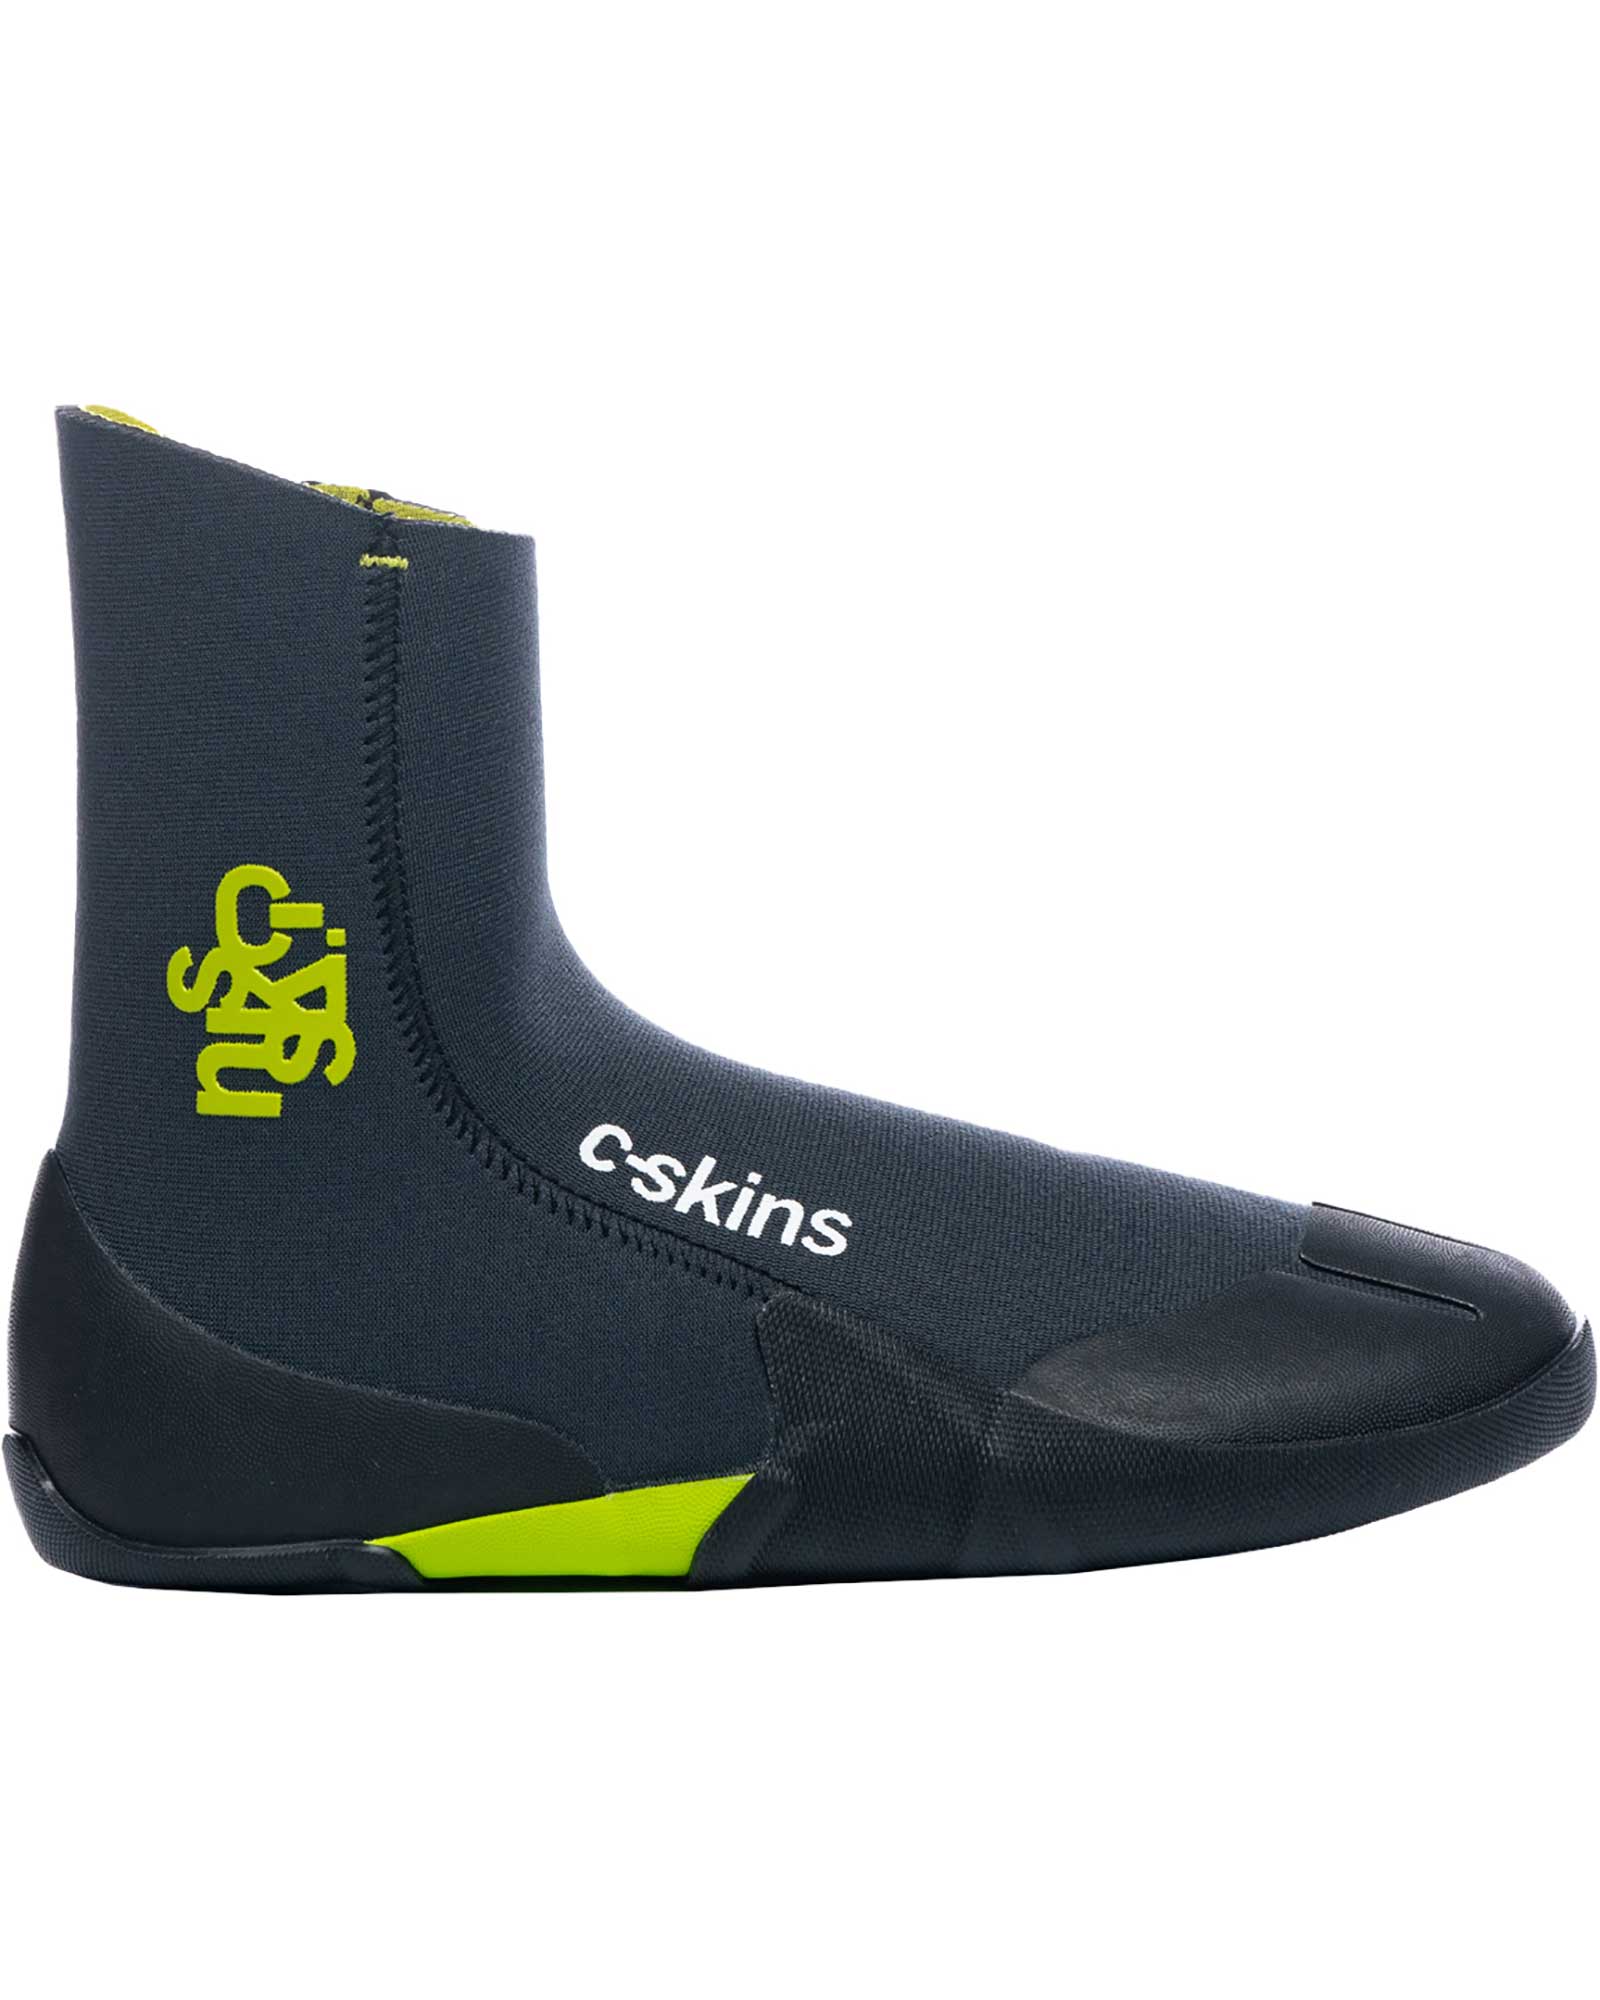 C Skins Legend 3.5mm Zipped Kids’ Boots - Graphite/Flash Green/Black L